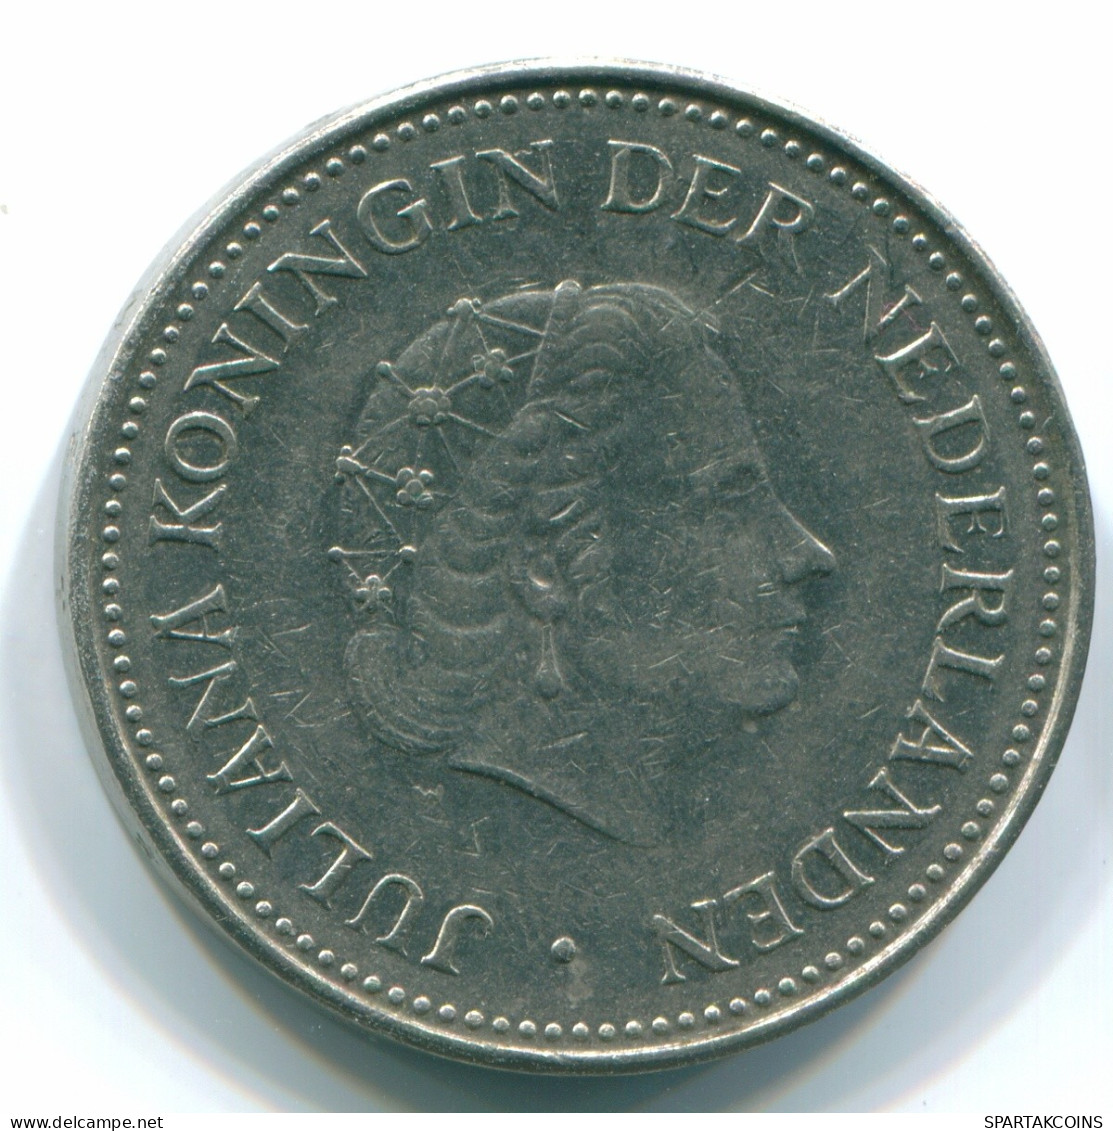 1 GULDEN 1971 NETHERLANDS ANTILLES Nickel Colonial Coin #S12004.U.A - Antilles Néerlandaises